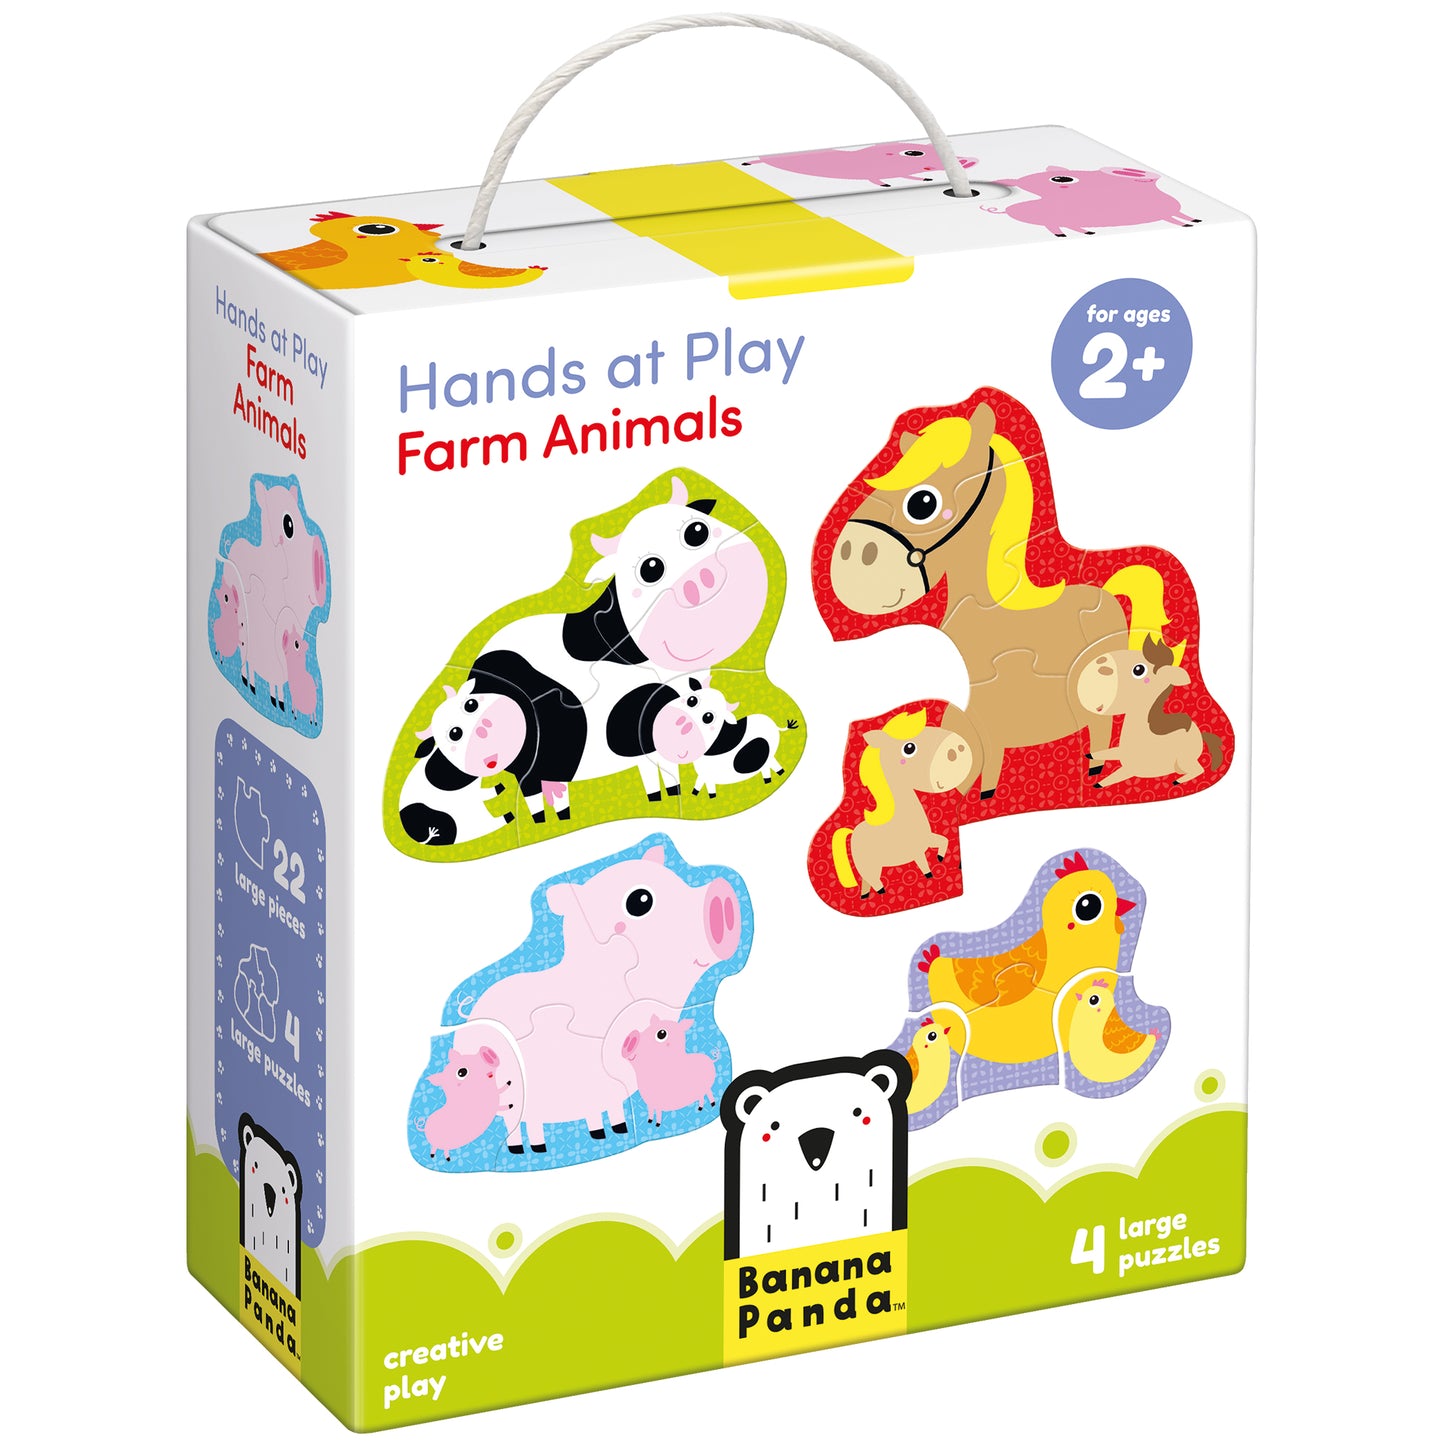 Hands at Play Farm Animals